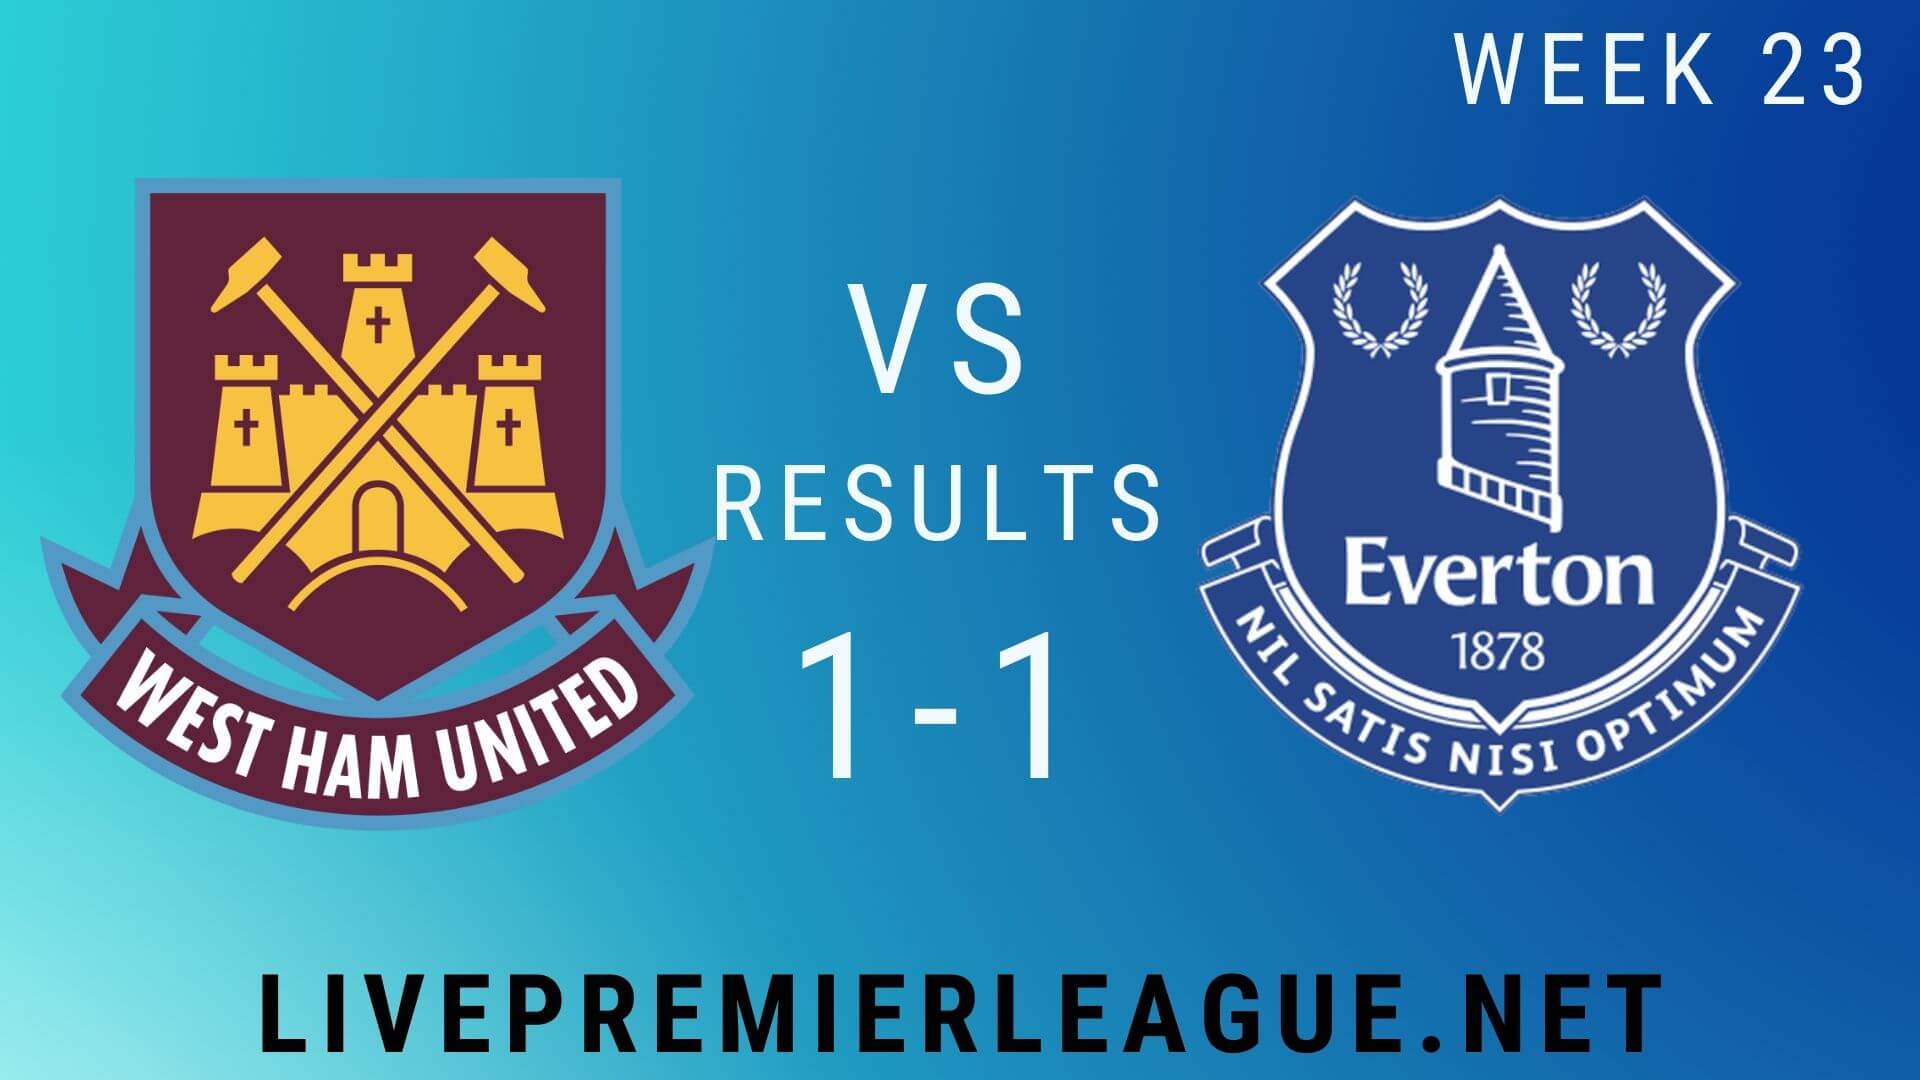 West Ham United Vs Everton | Week 23 Result 2020